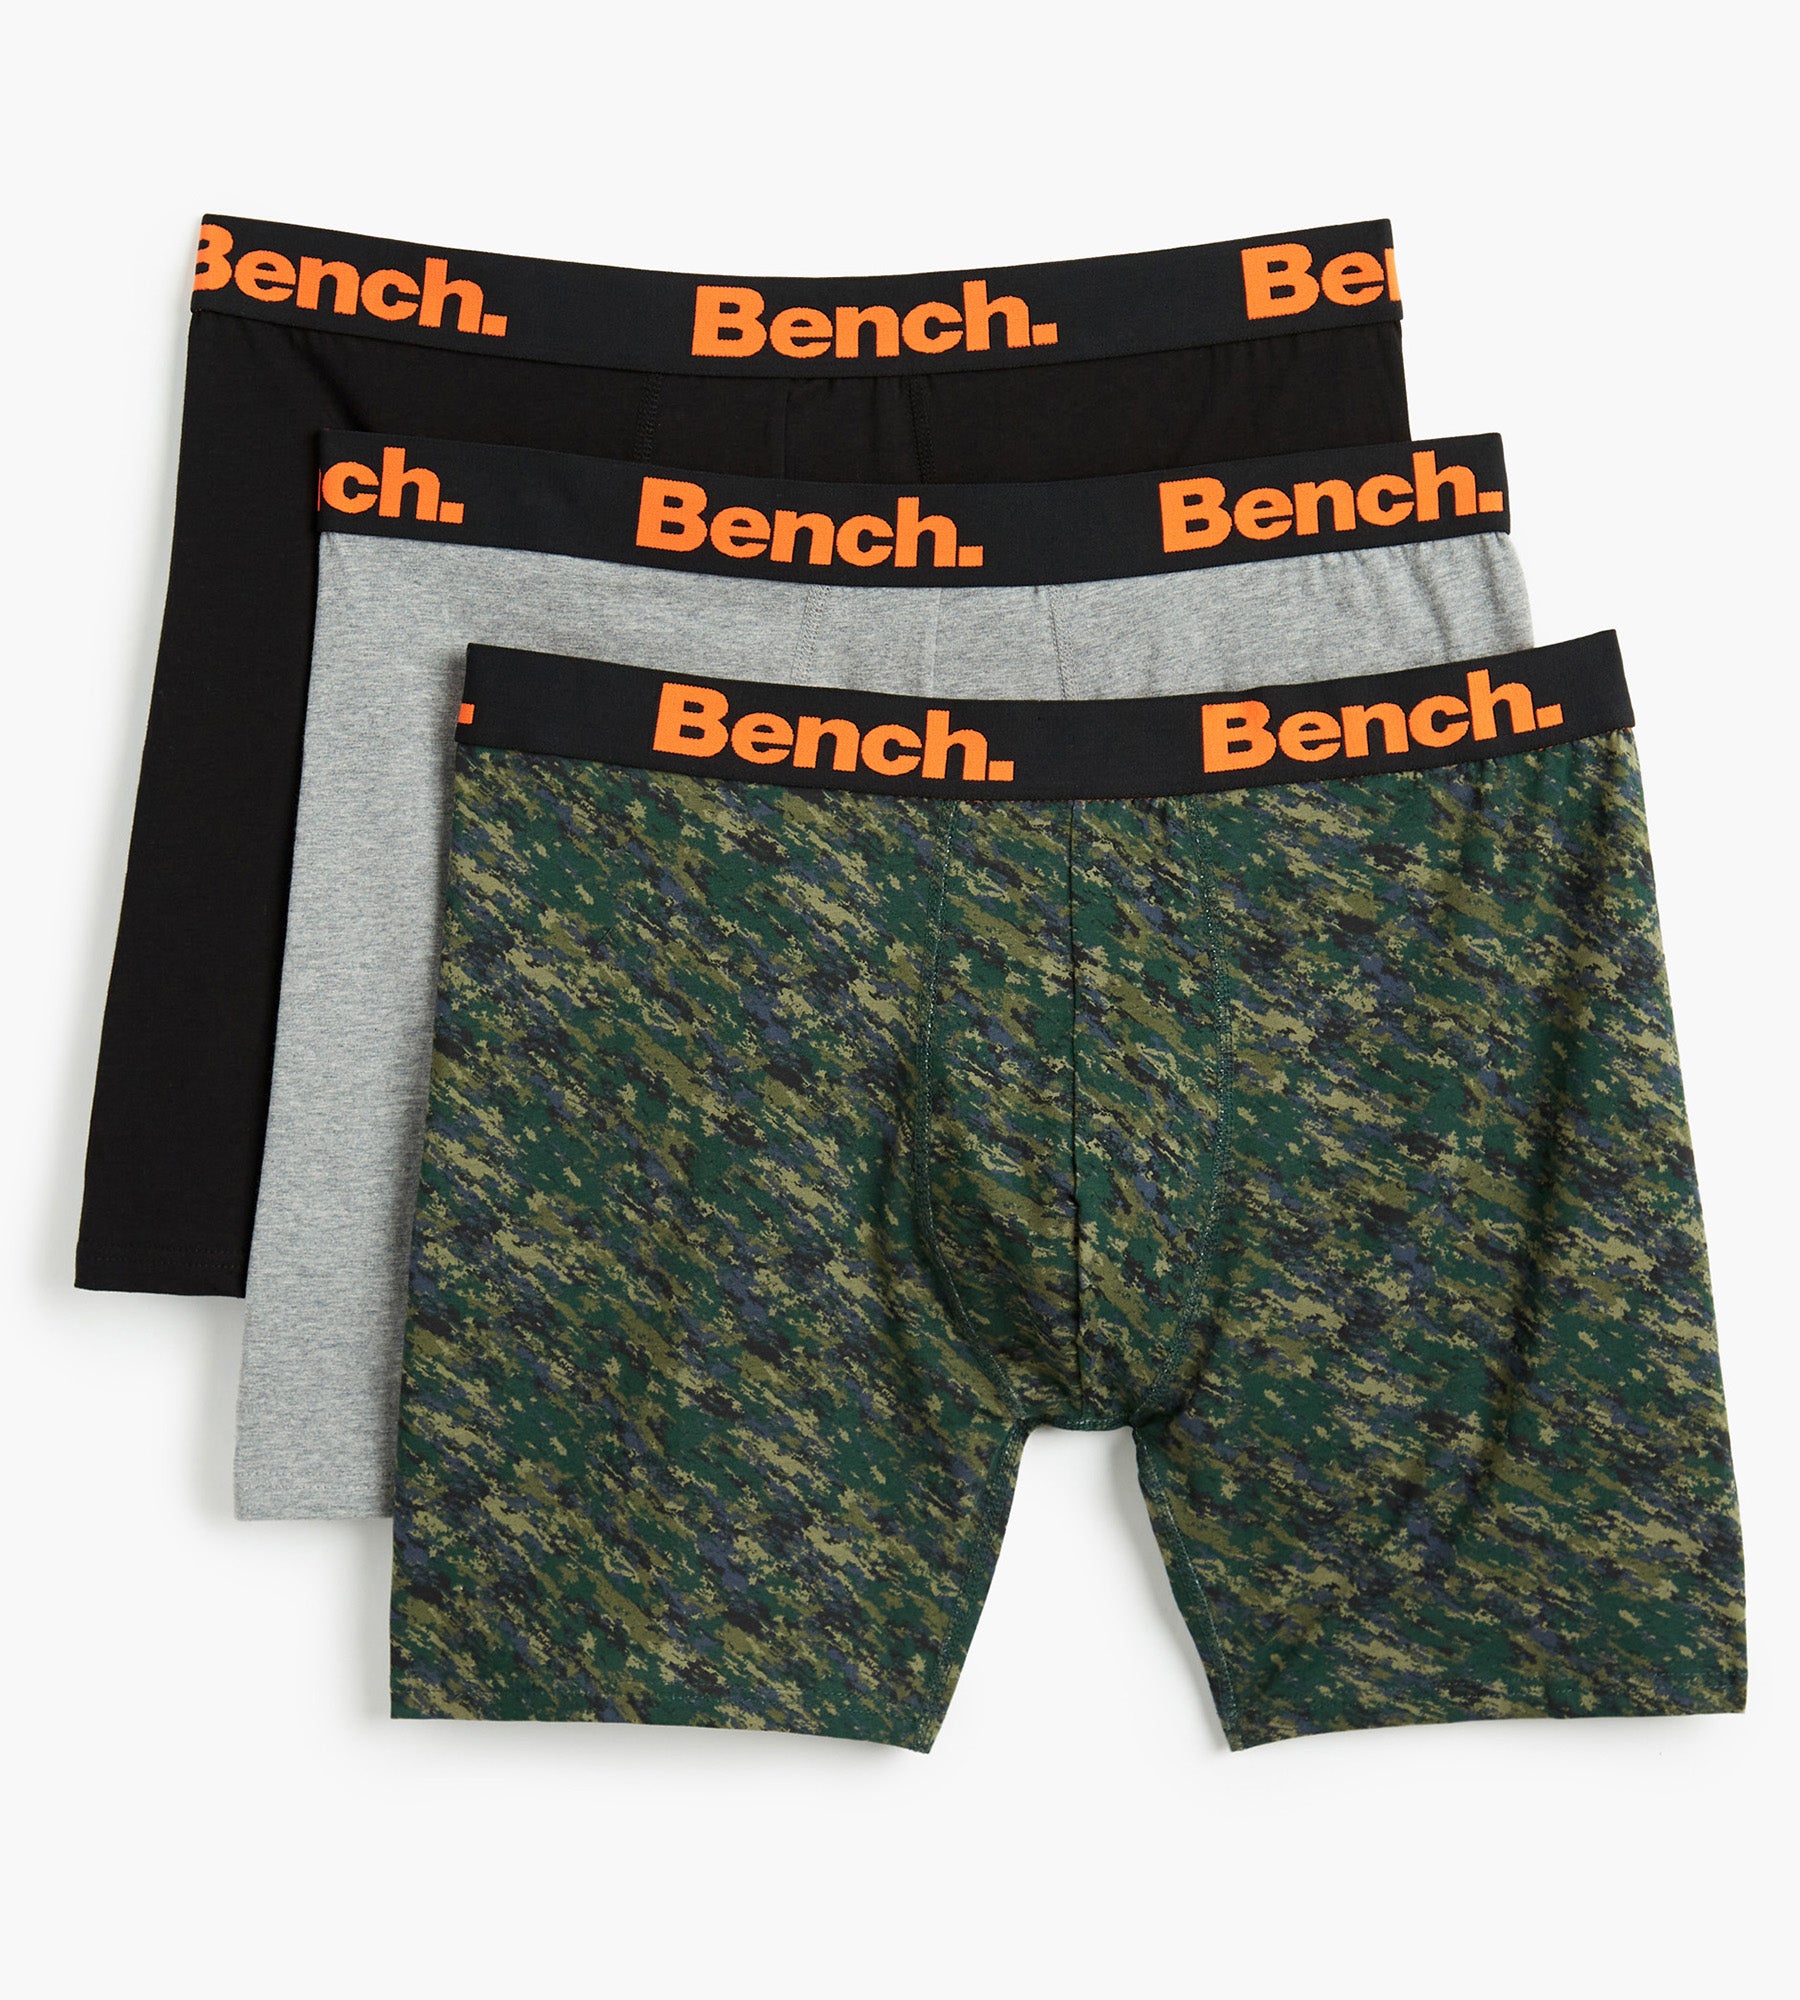 Men’s Next Underwear A-Front 8 Pack - XL-39-41” - *New* bnwt. £42 RRP